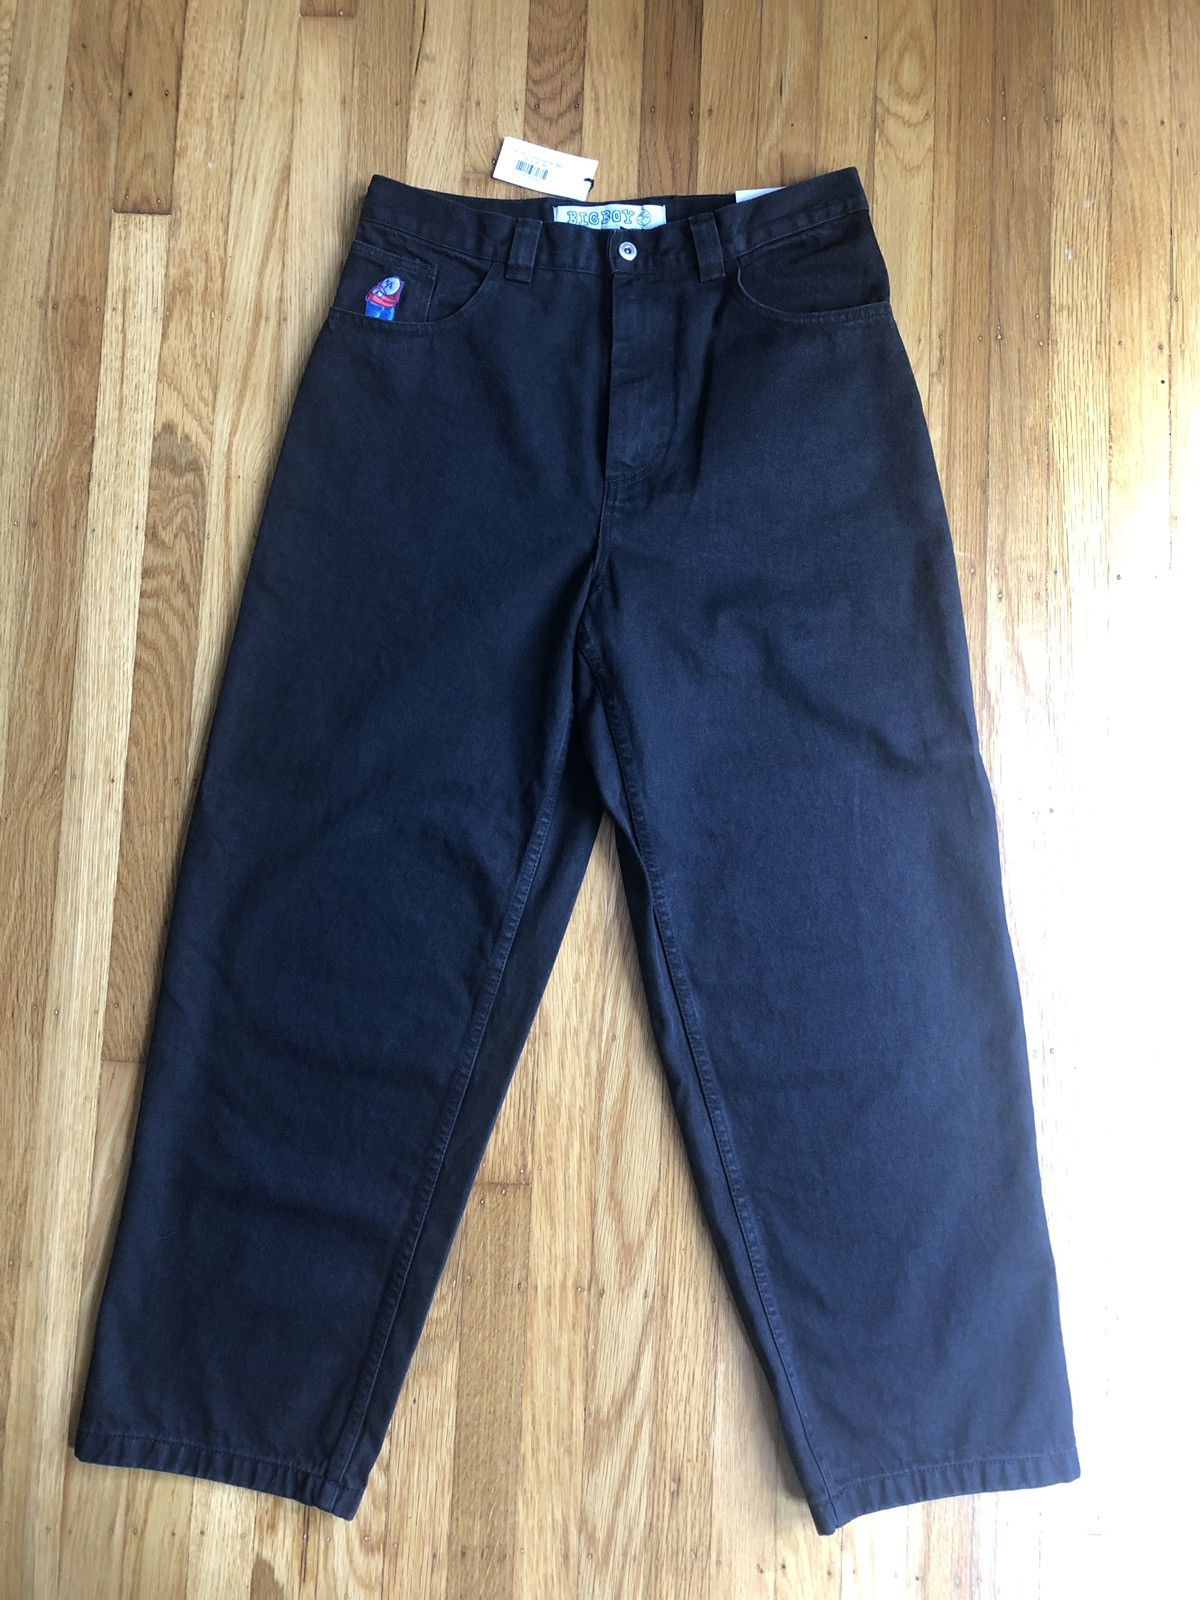 Polar Skate Co. Big Boy Jeans - Pitch Black | Grailed